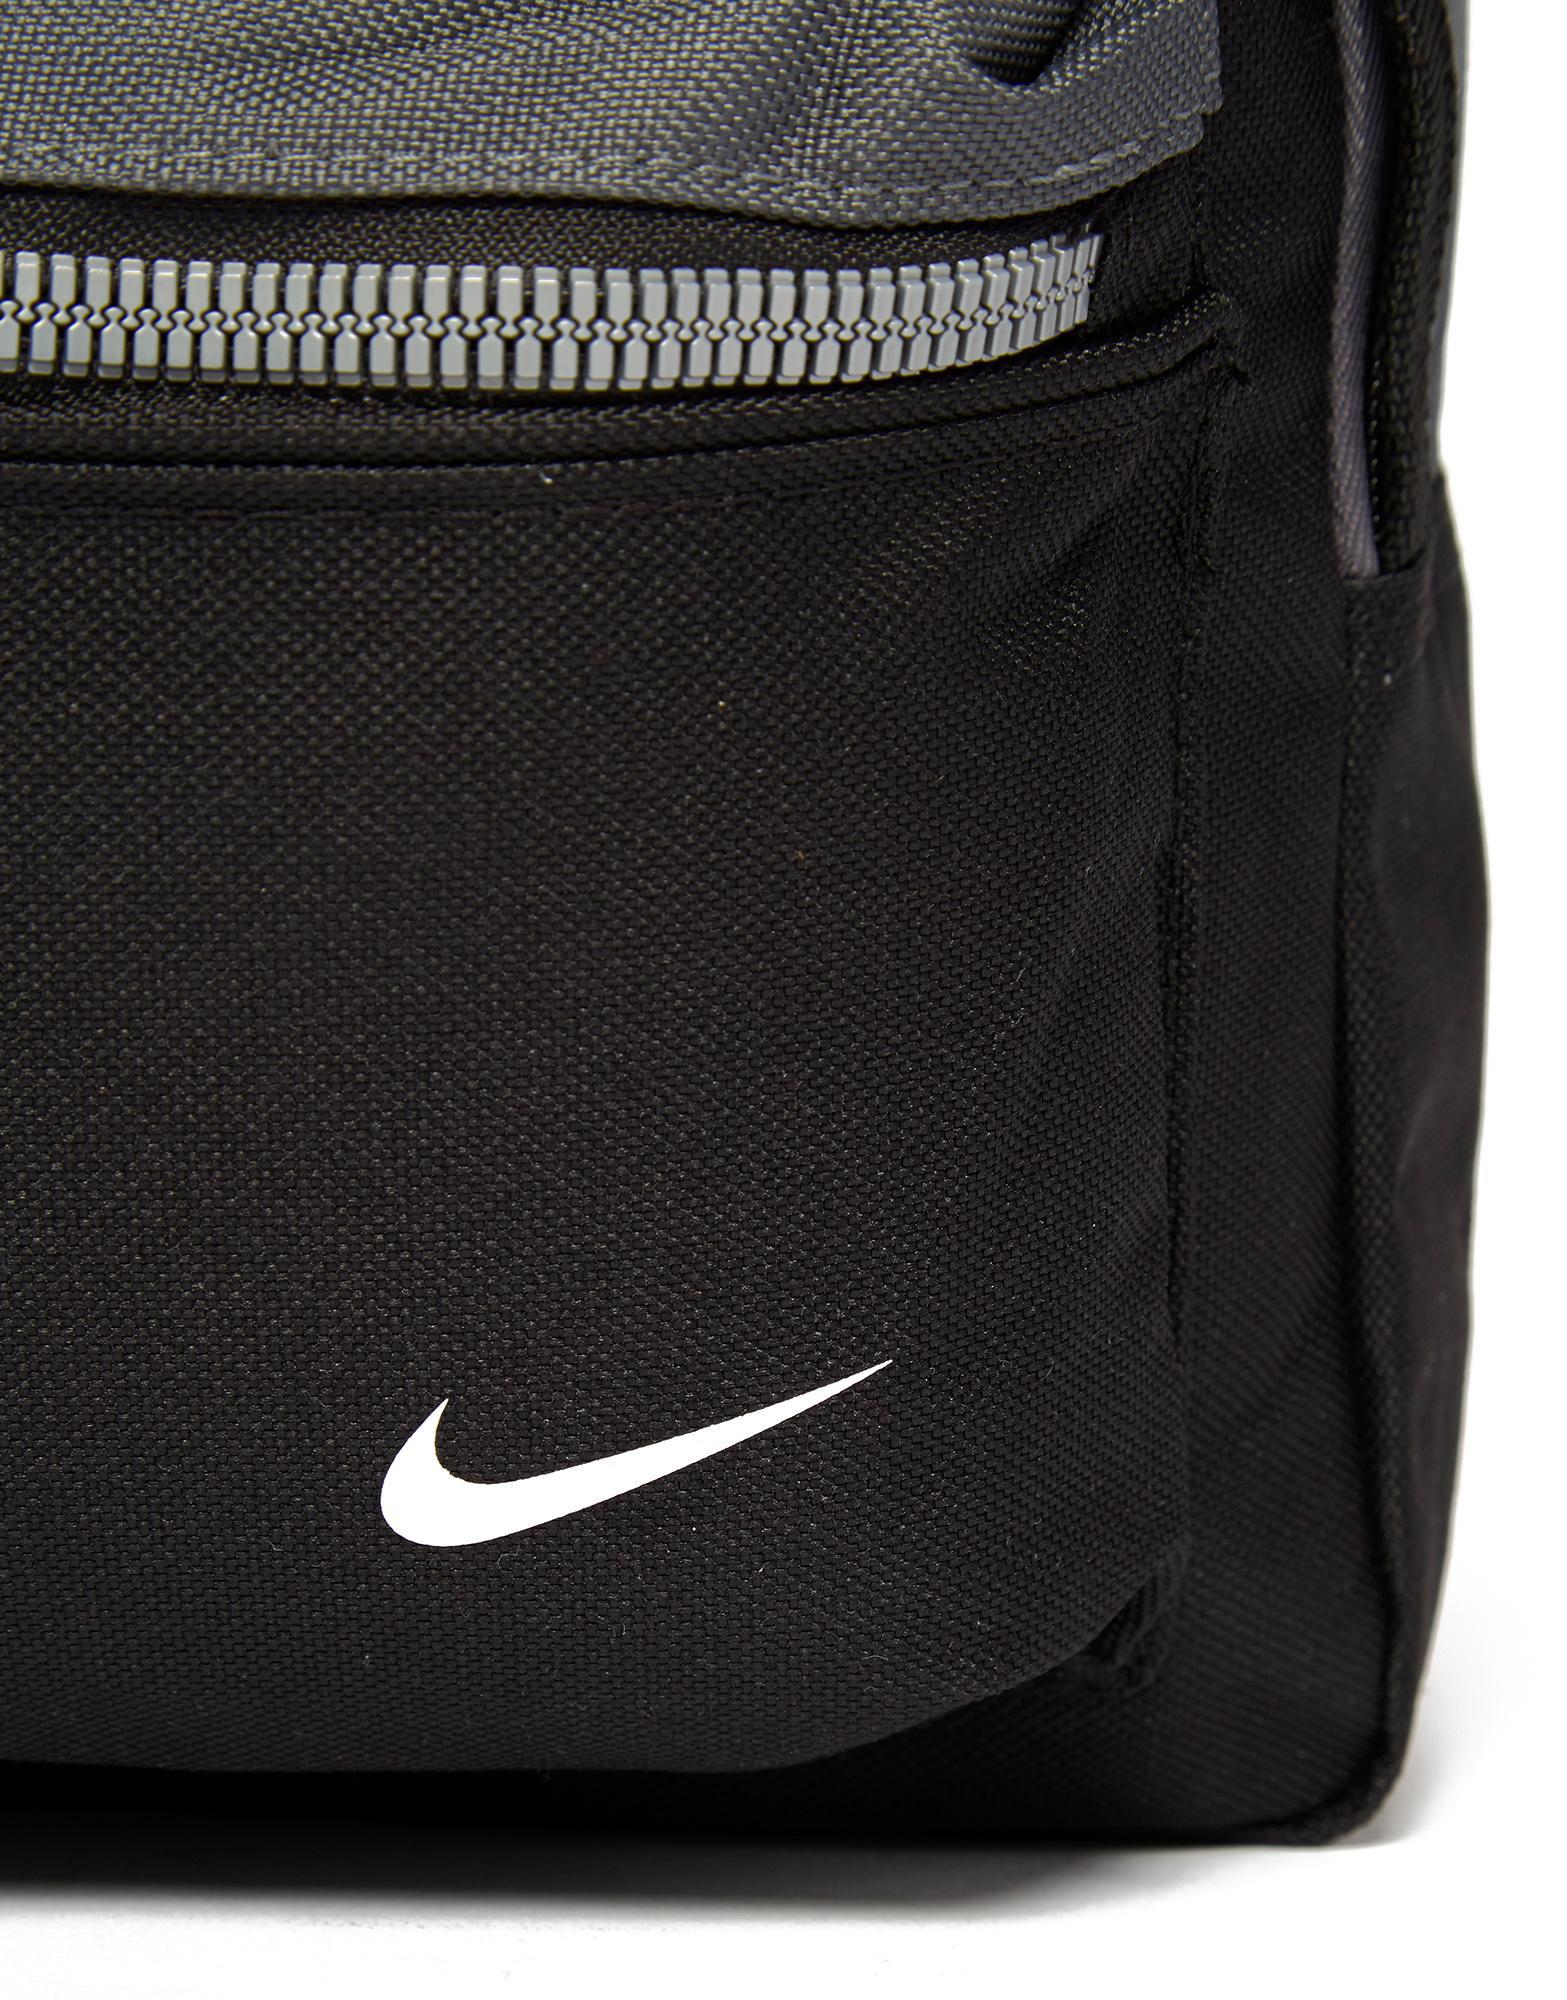 Nike Rubber Just Do It Mini Backpack in Black/Grey (Black) for Men - Lyst